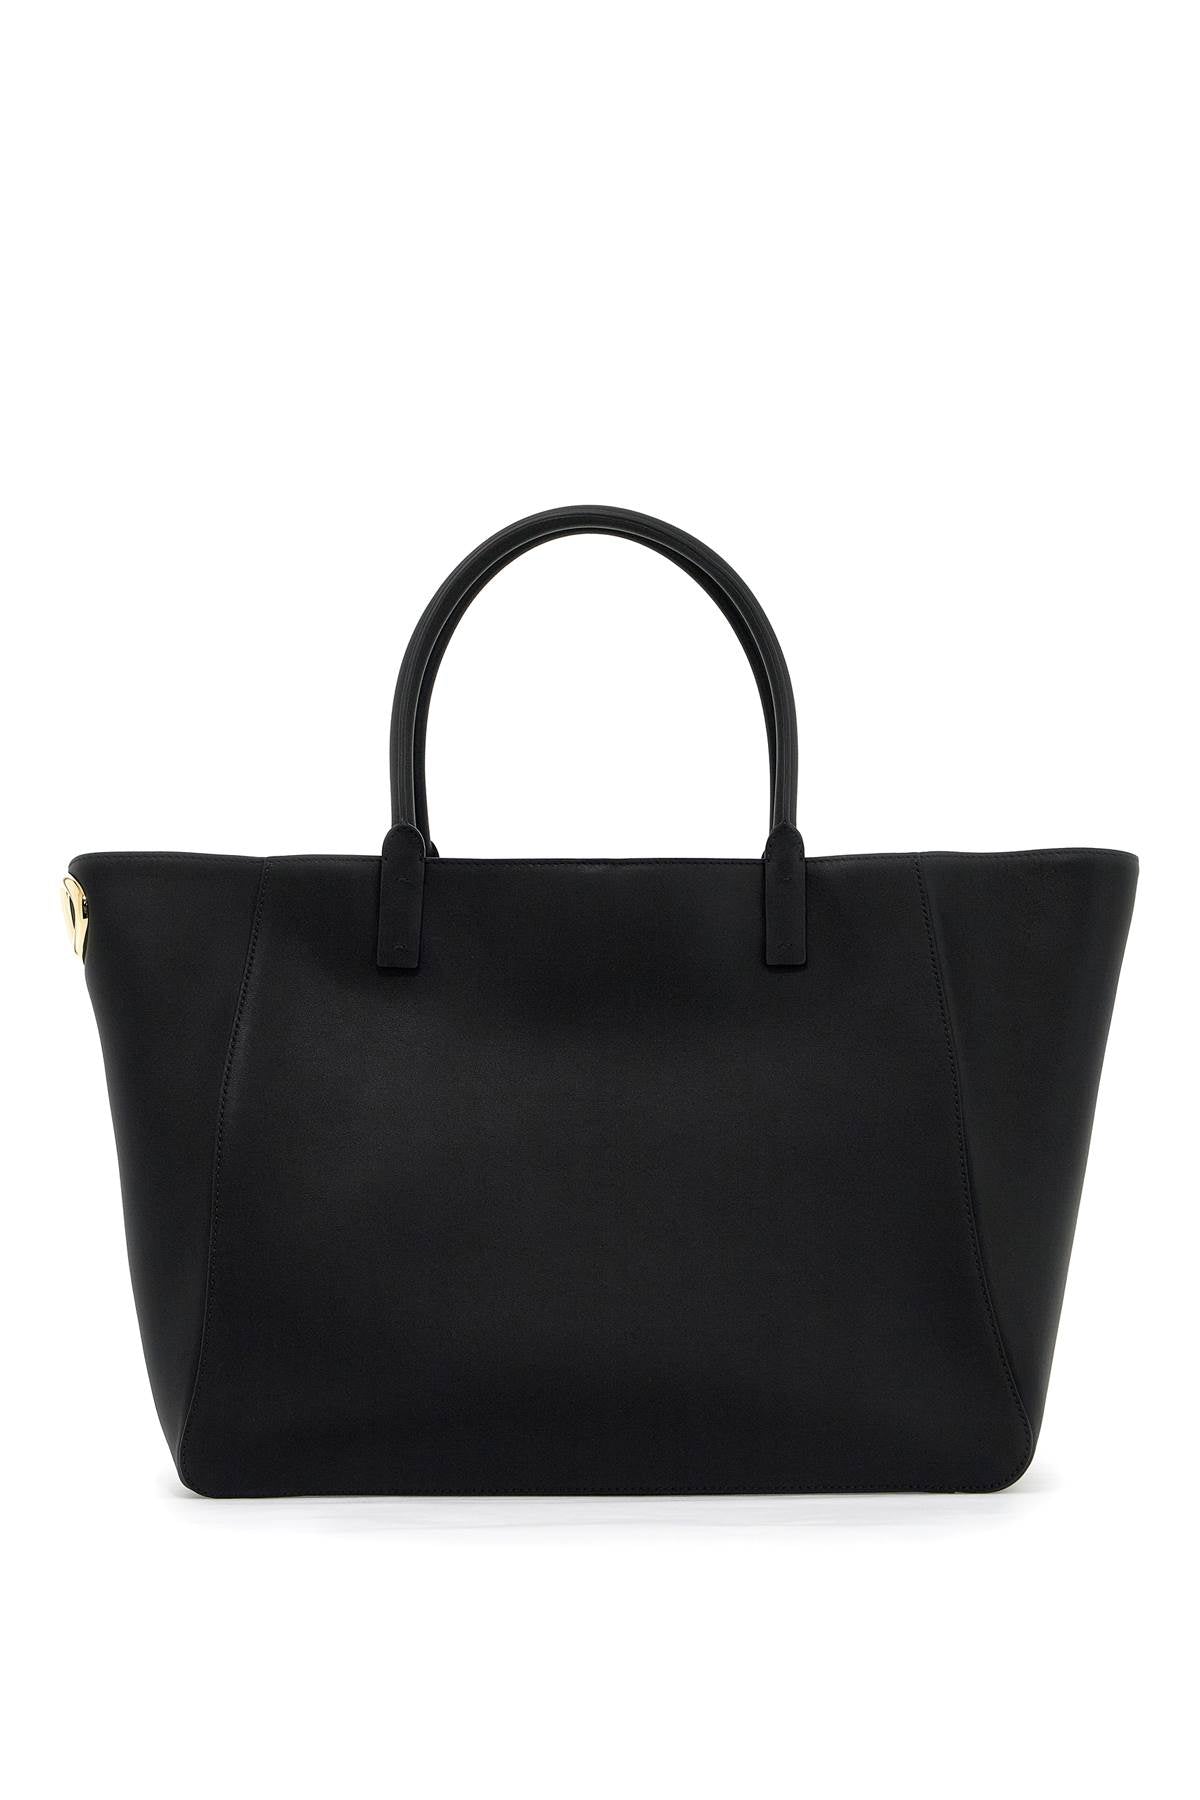 Valentino GARAVANI leather tote bag - Black